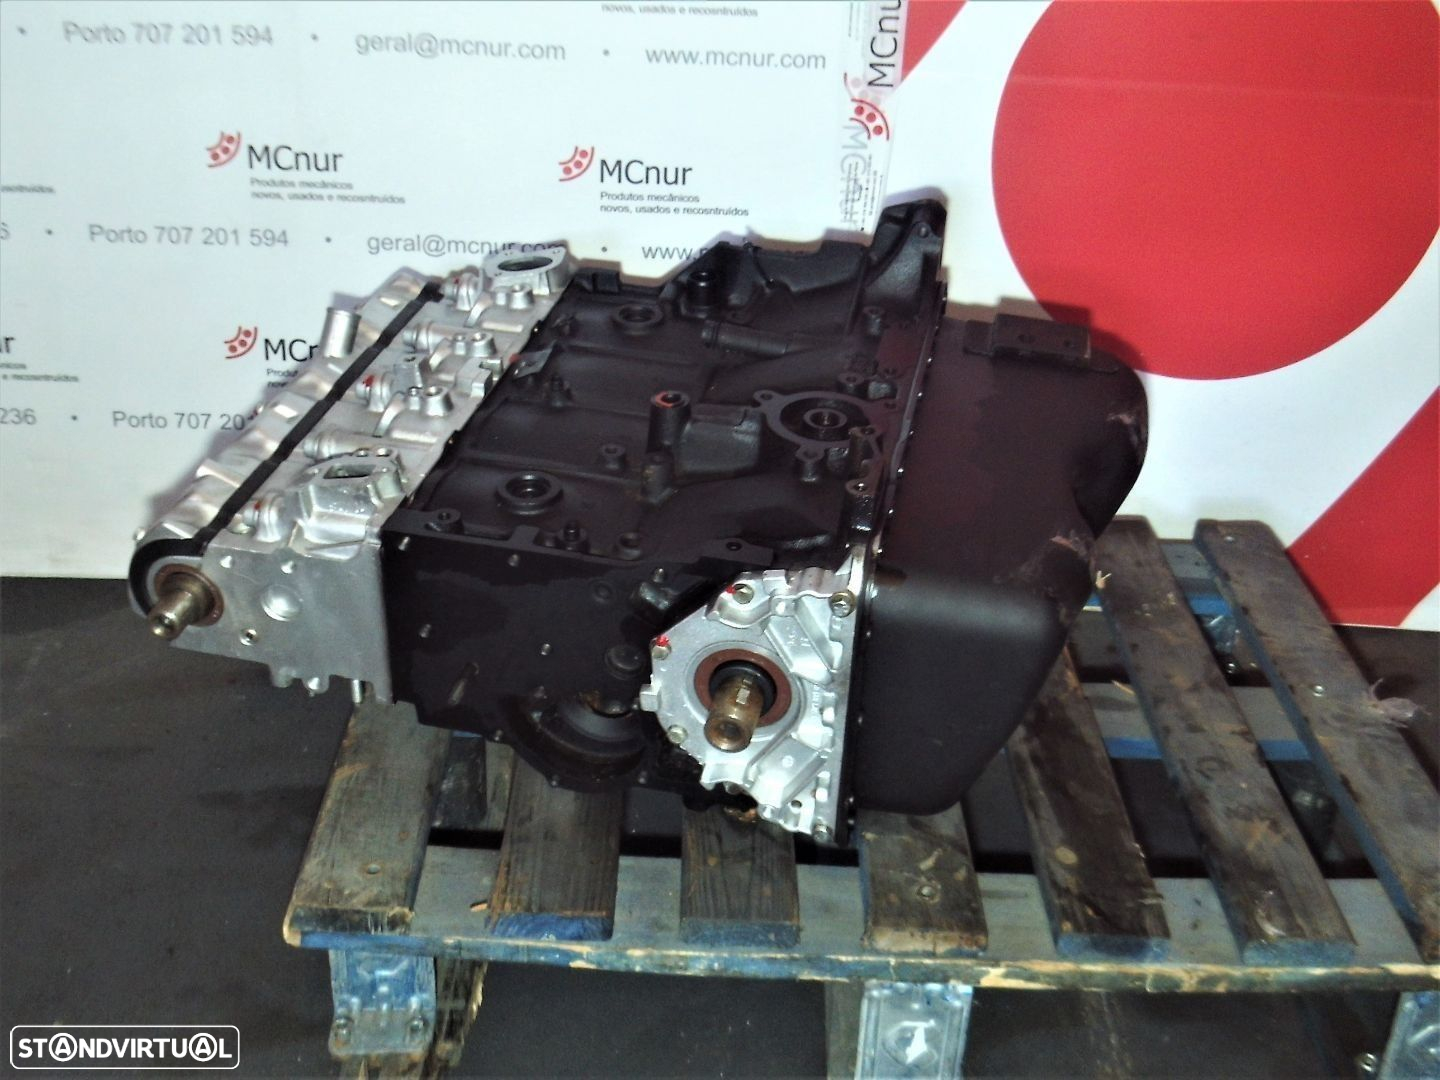 Motor  Reconstruído Citroen Xsara  Ref DJY   ᗰᑕᑎᑌᖇ | Produtos Mecânicos ®️ - 4